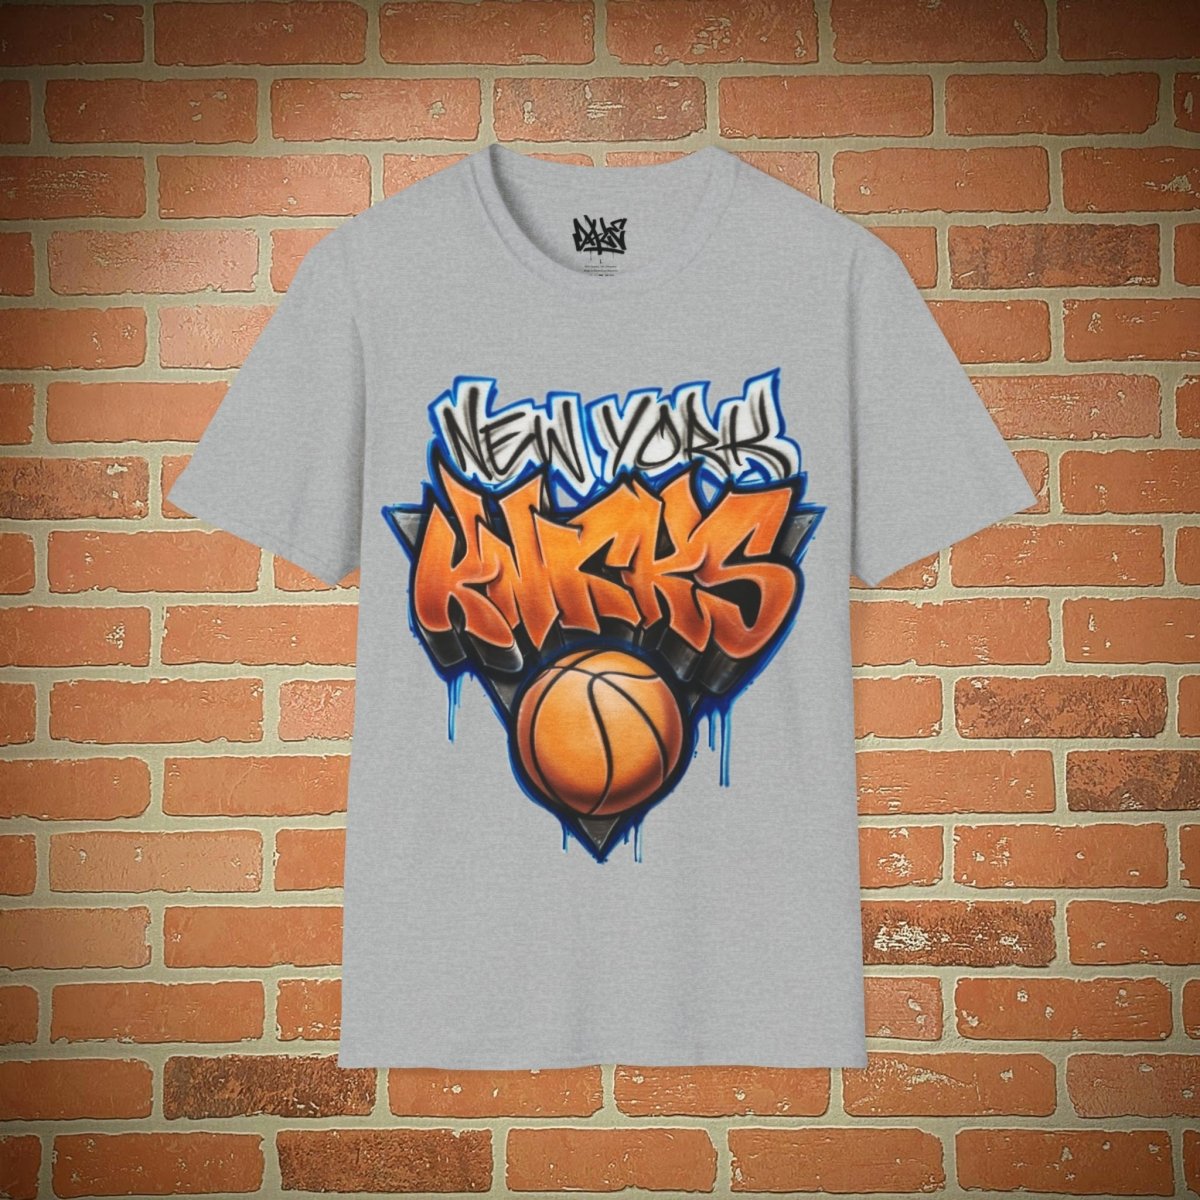 NY Knicks Graffiti T shirt Customizable Airbrush T shirt Design from Airbrush Customs x Dale The Airbrush Guy